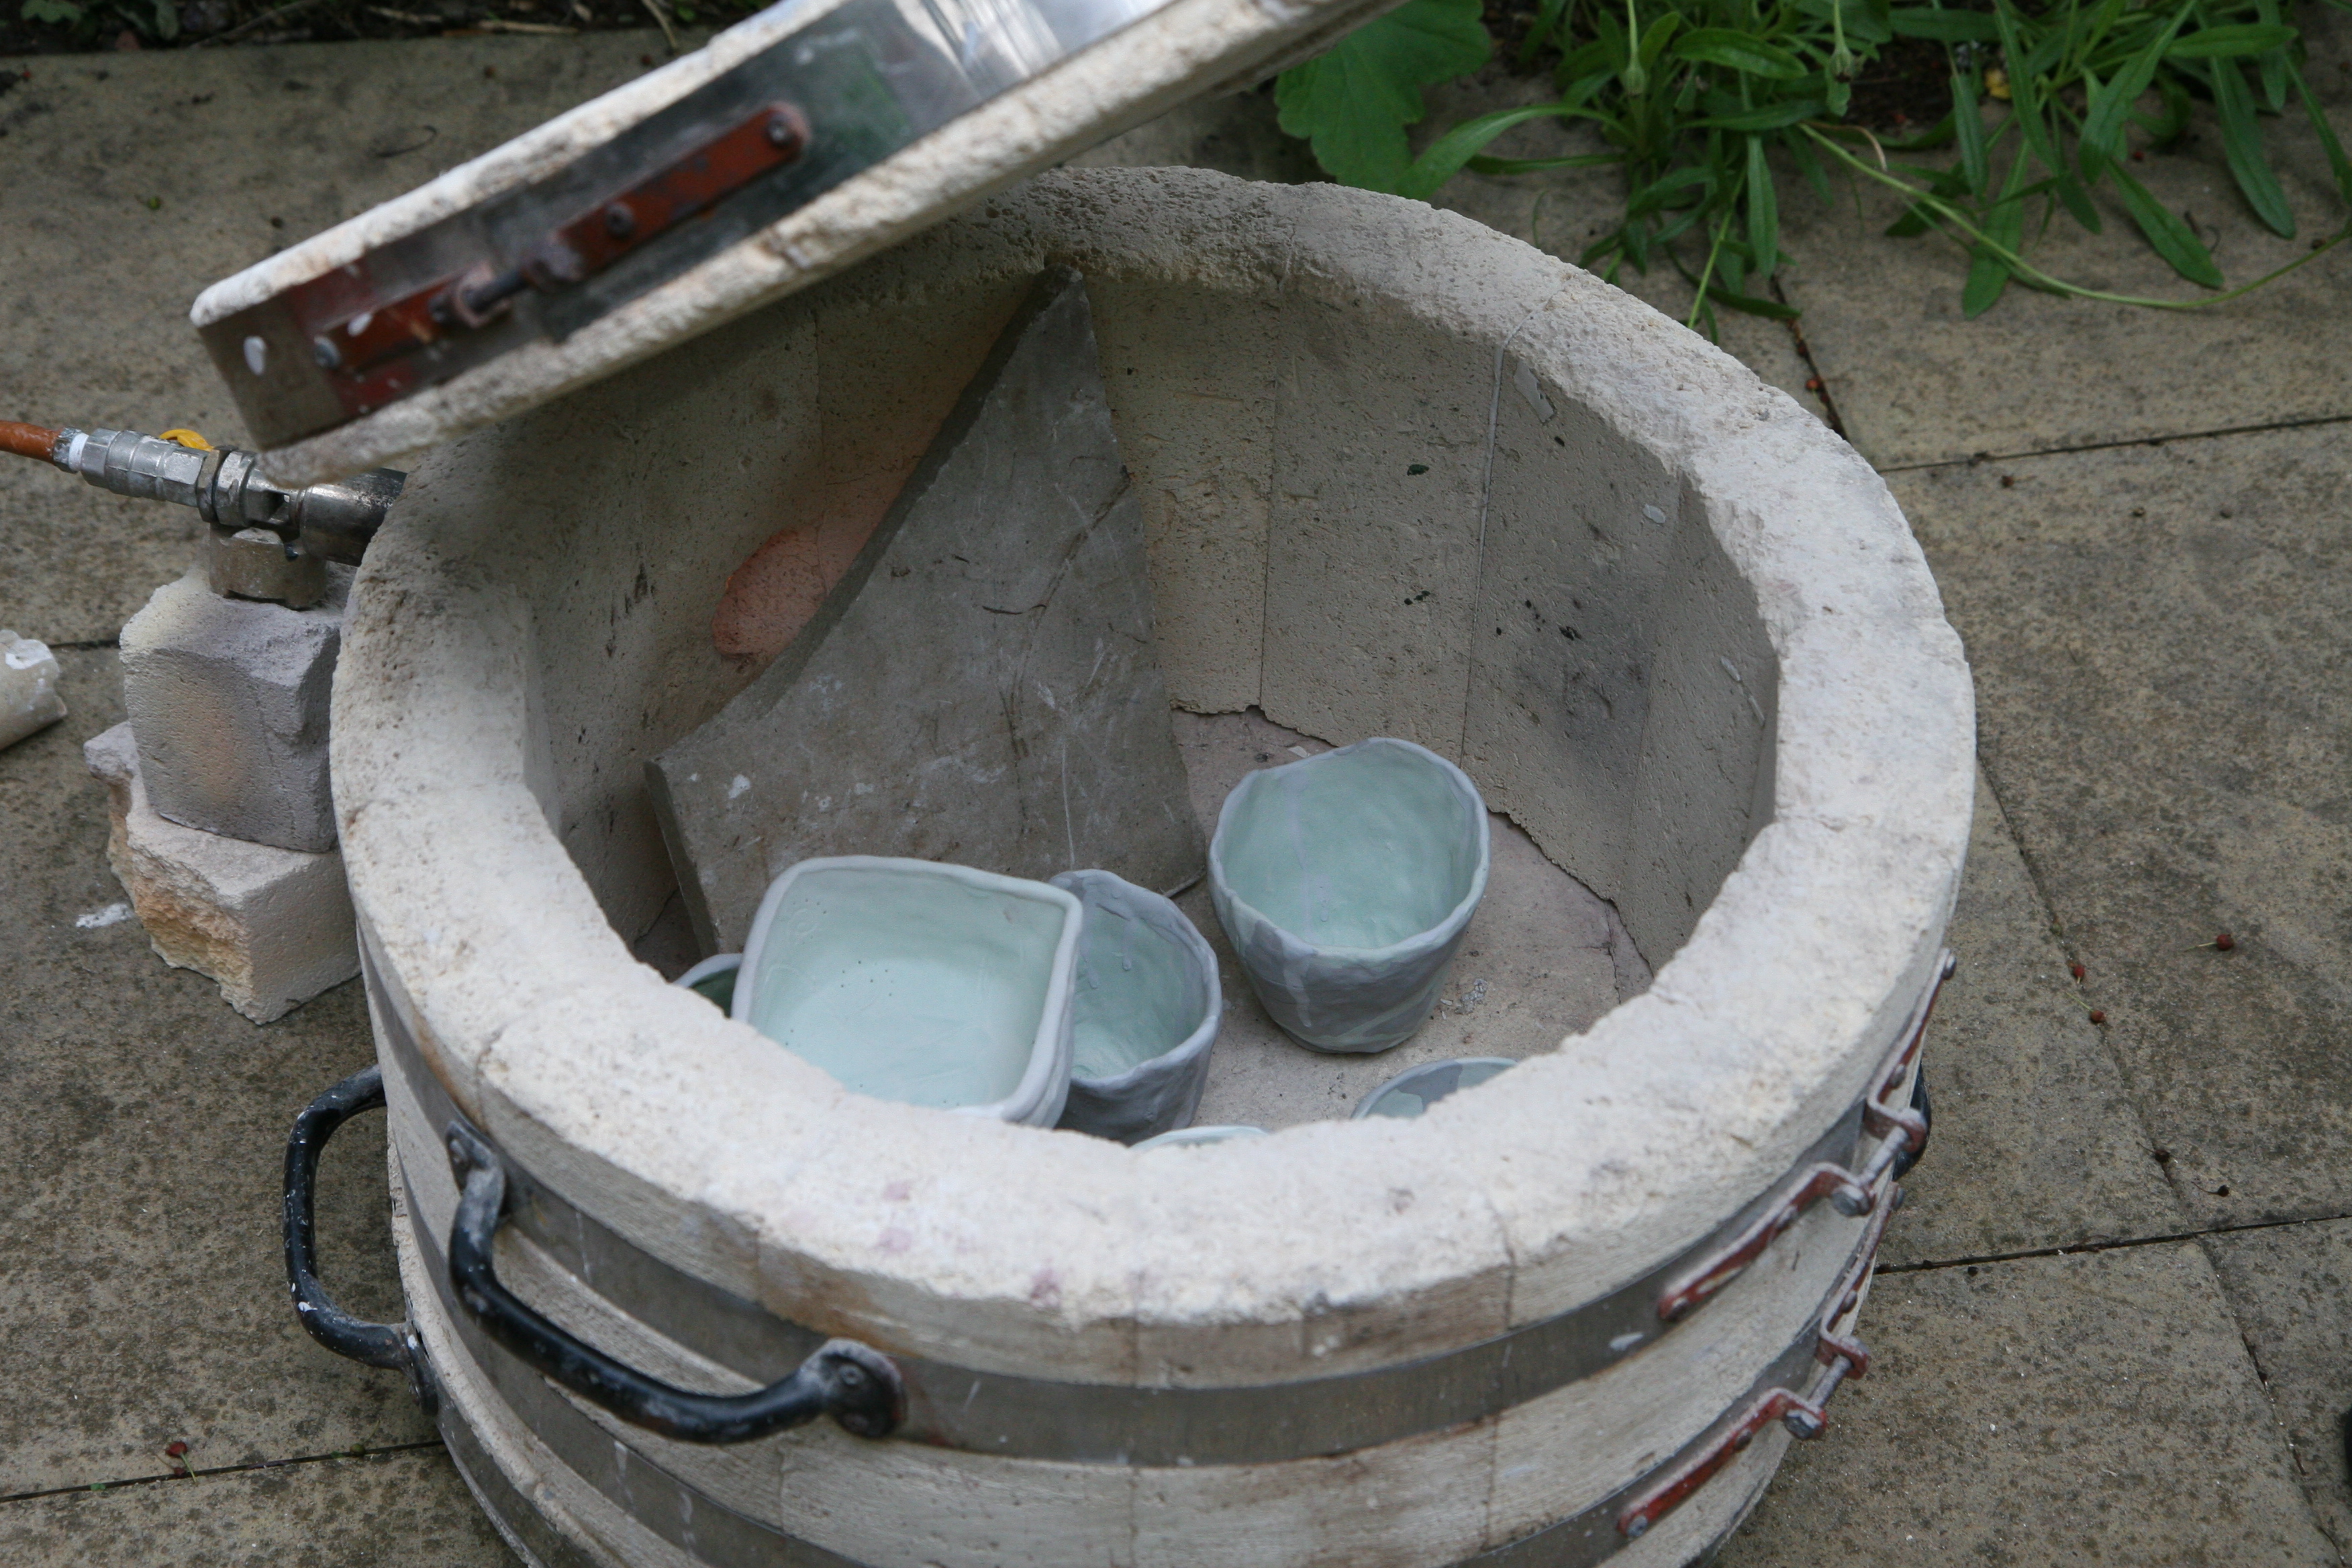 Setting up the Raku kiln - bisque fired glazed pots